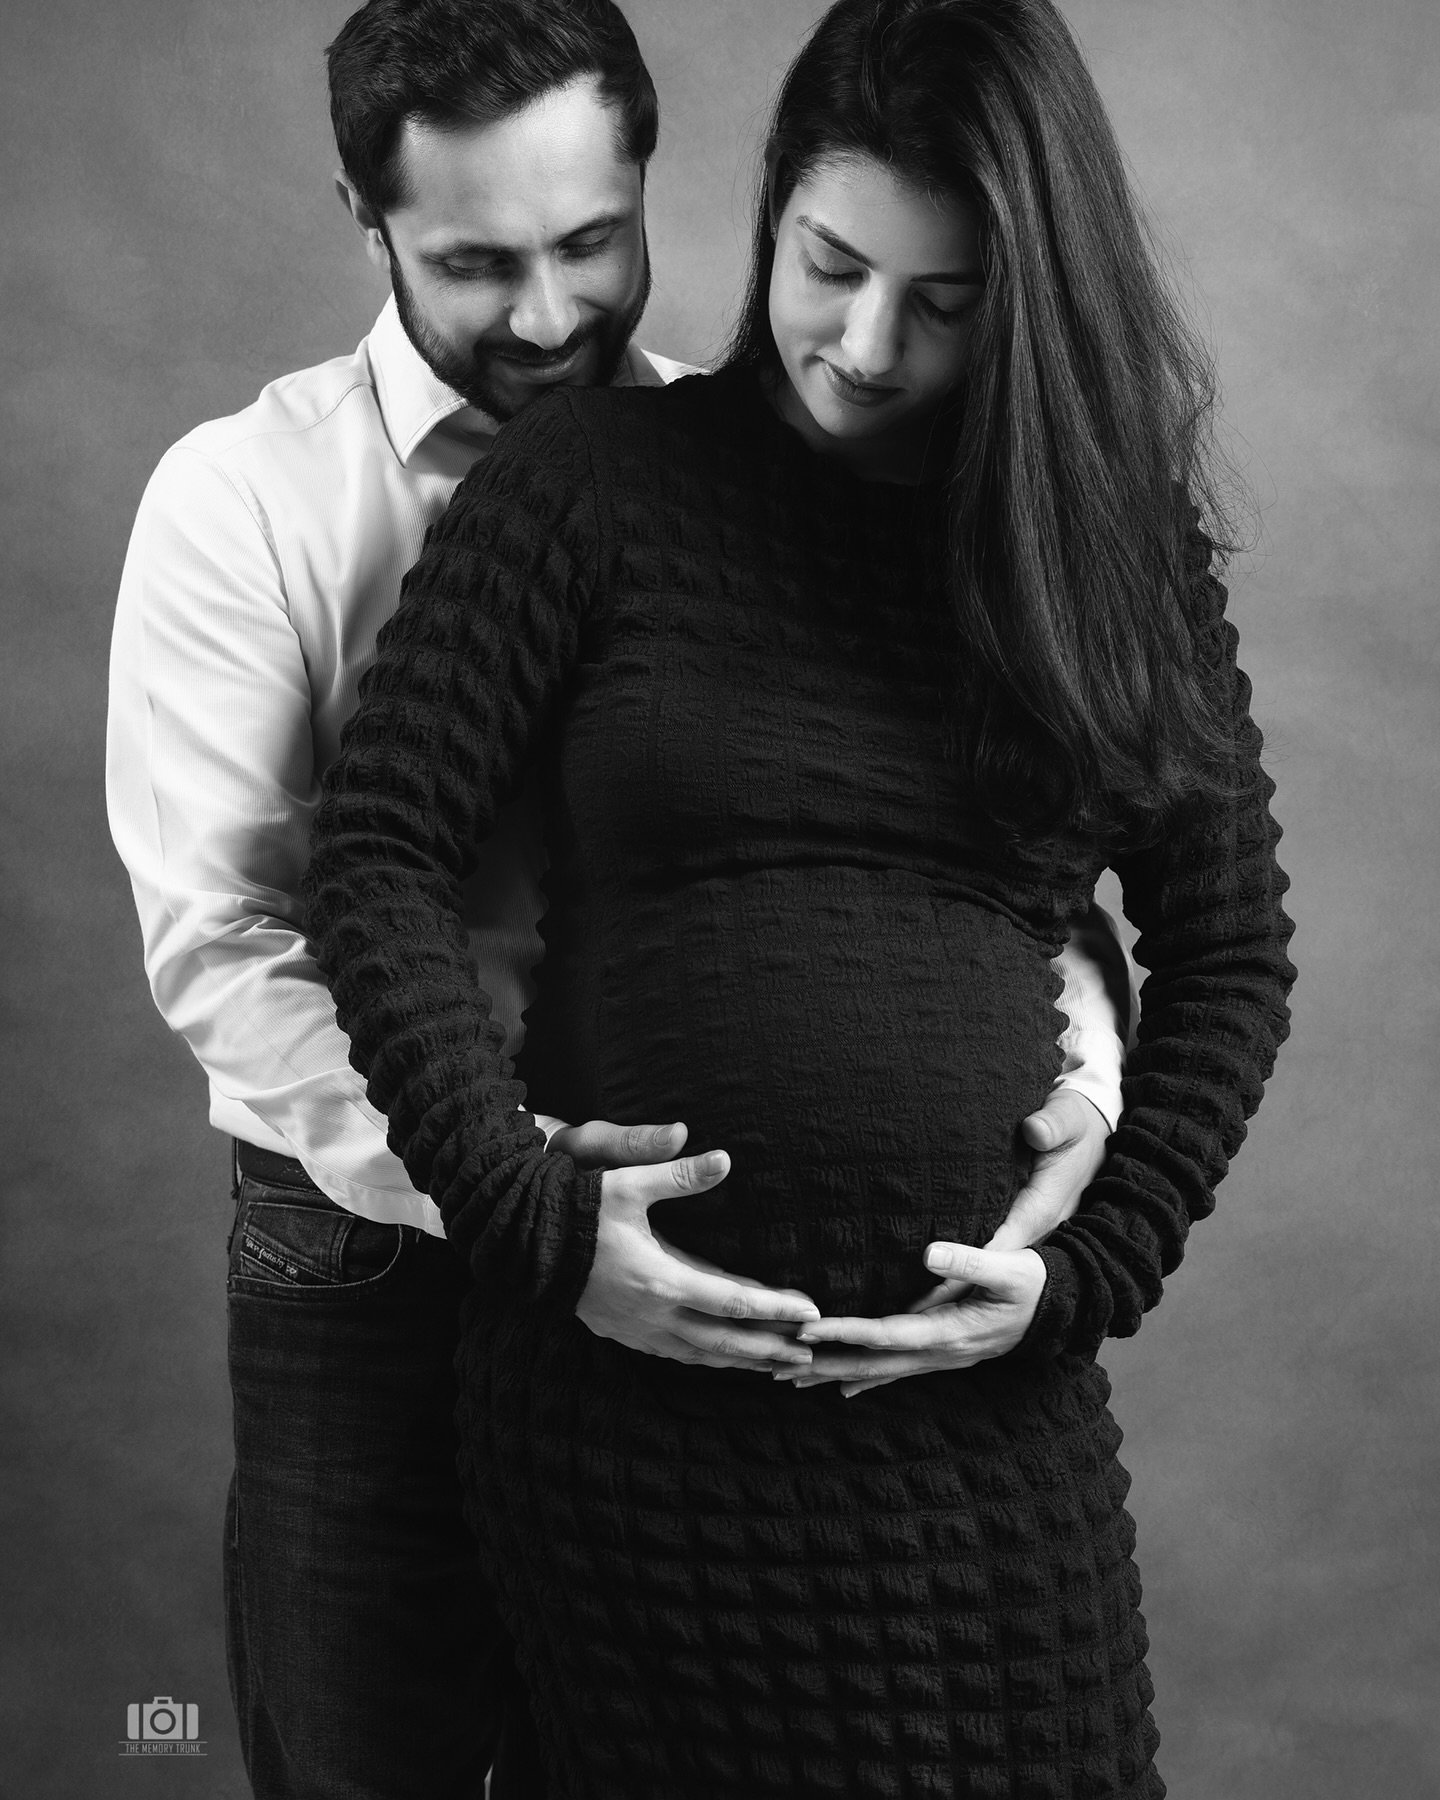 Bliss ✨
.
.
@wondersbythememorytrunk
📍The Memory Trunk Studio, Jammu

#babyshoots #maternityphotoshoot #familyphotographer #kidsphotography #baby #love #thememorytrunk #momtobe #momlife #maternityphotos #babybump #pregnancyphotoshoot #maternitysessi